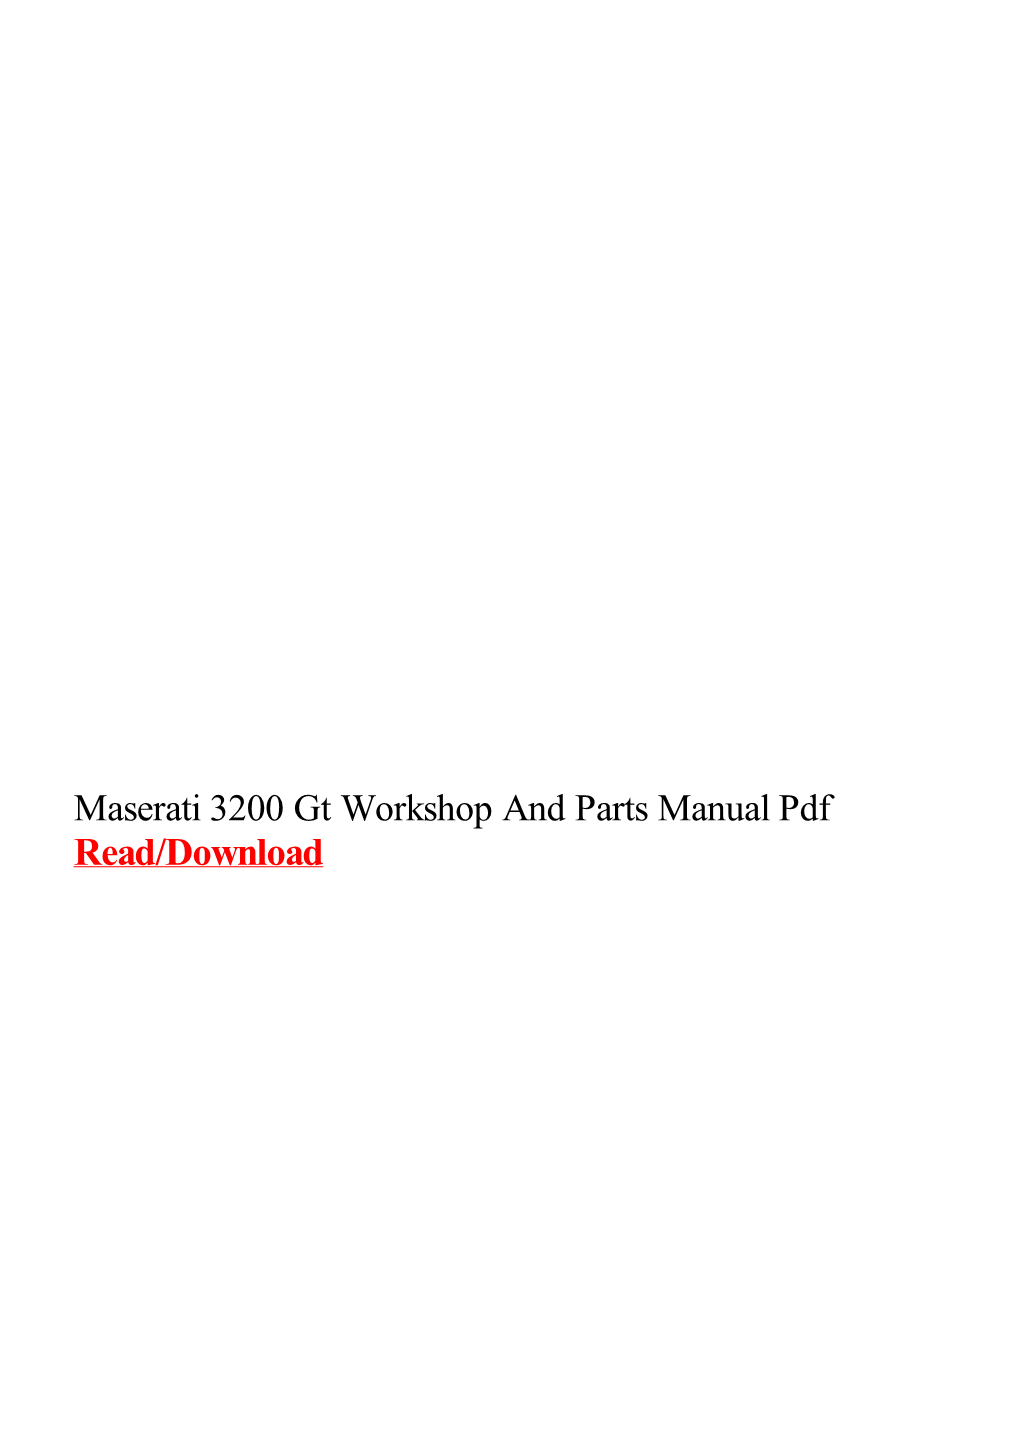 Maserati 3200 Gt Workshop and Parts Manual Pdf